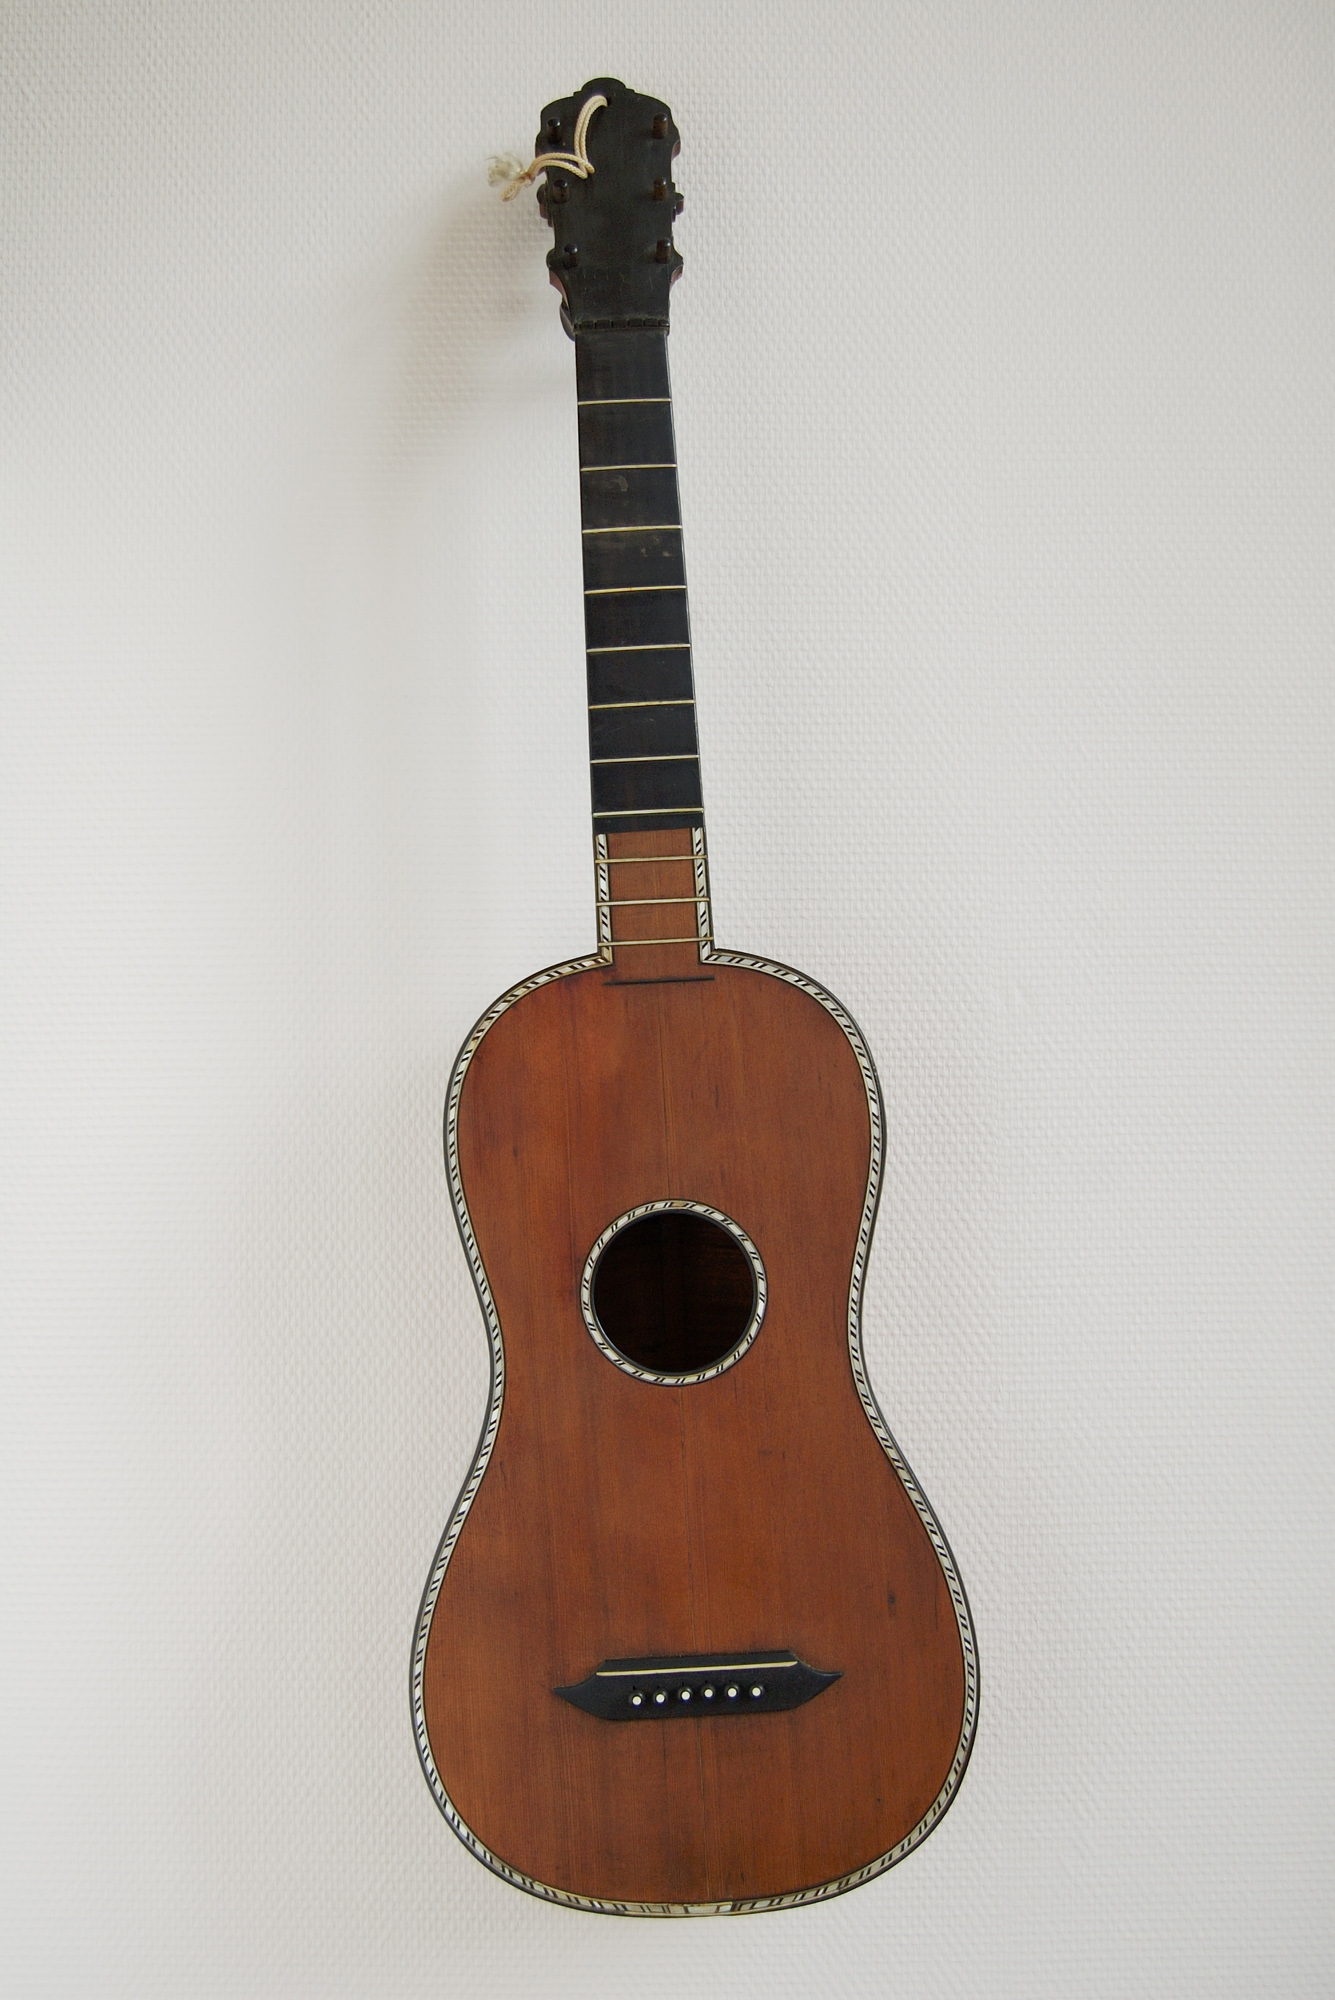 Anonyme-du-XIXe-siècle-Guitare-n°-inv-1988-4